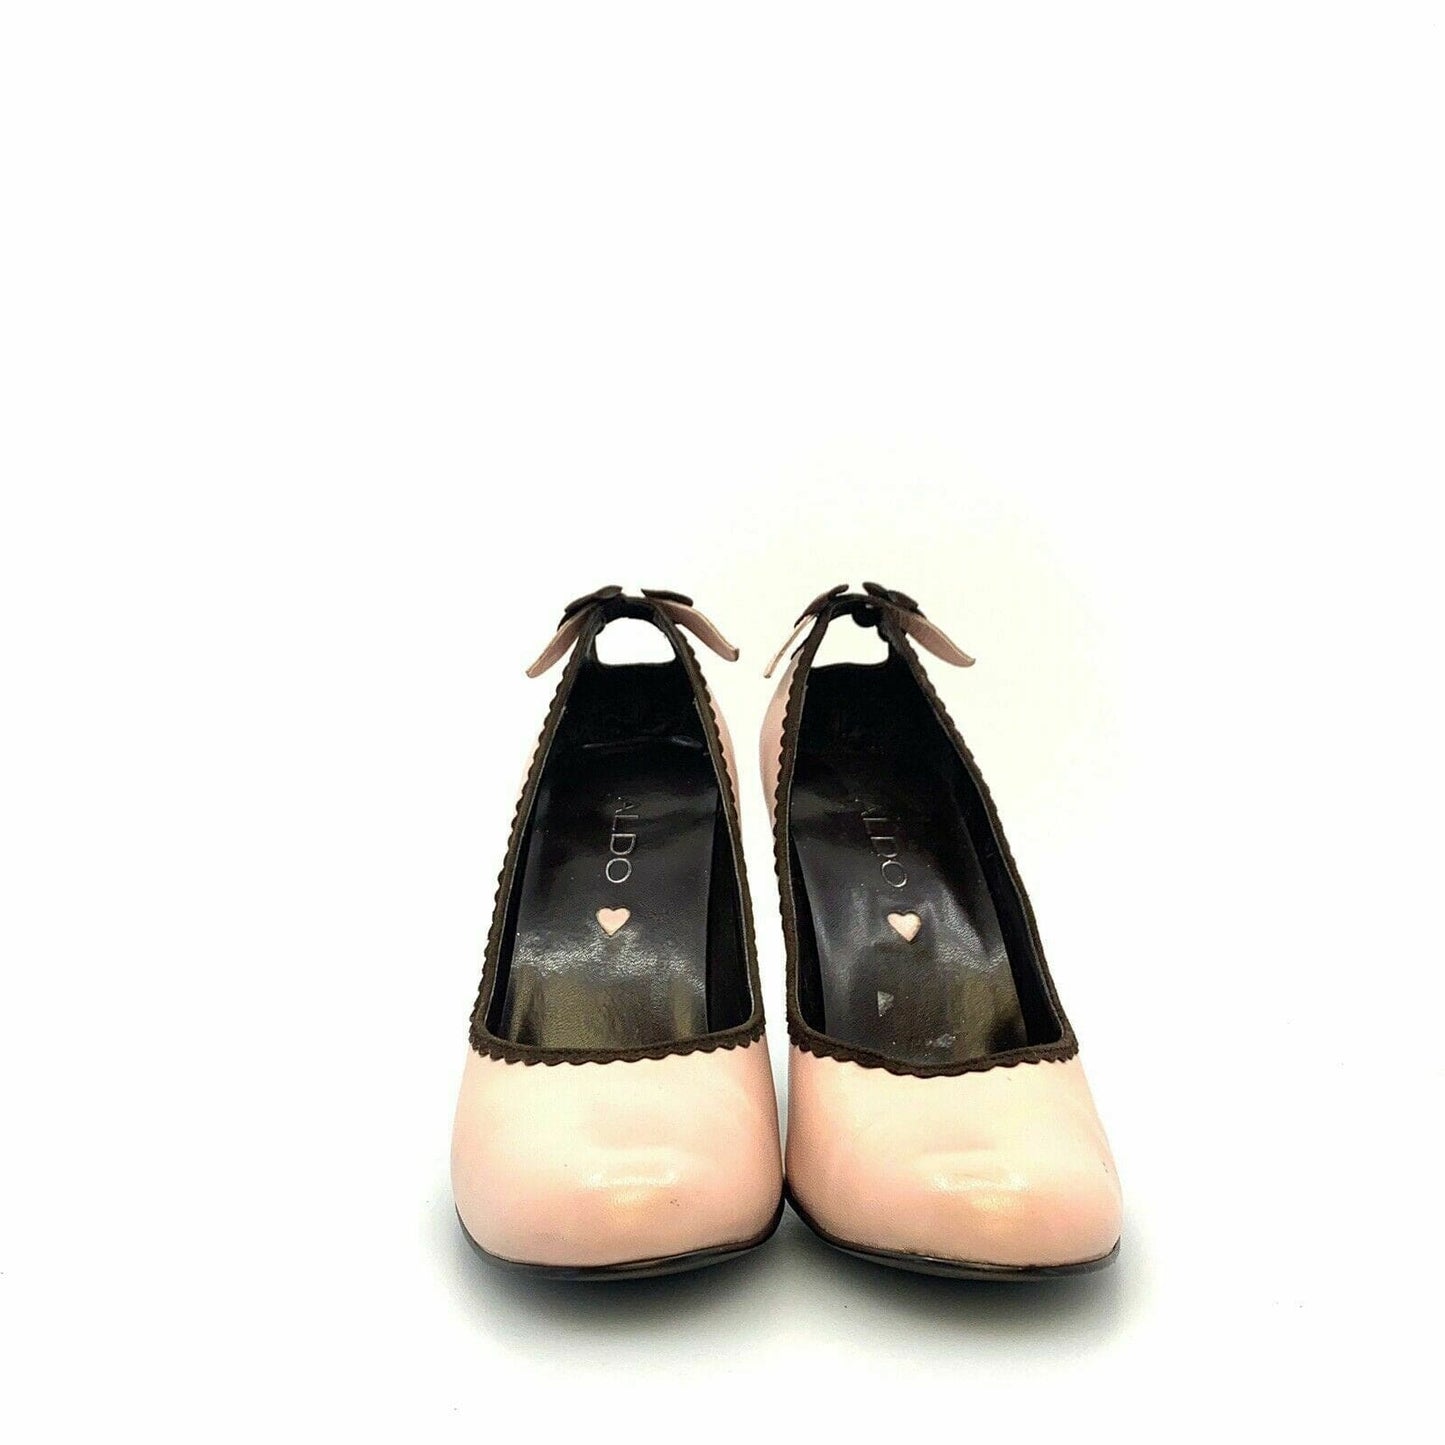 Aldo Womens Round Toe Spool Heel Cutout Flower Pumps, Pink / Brown - Size 6.5